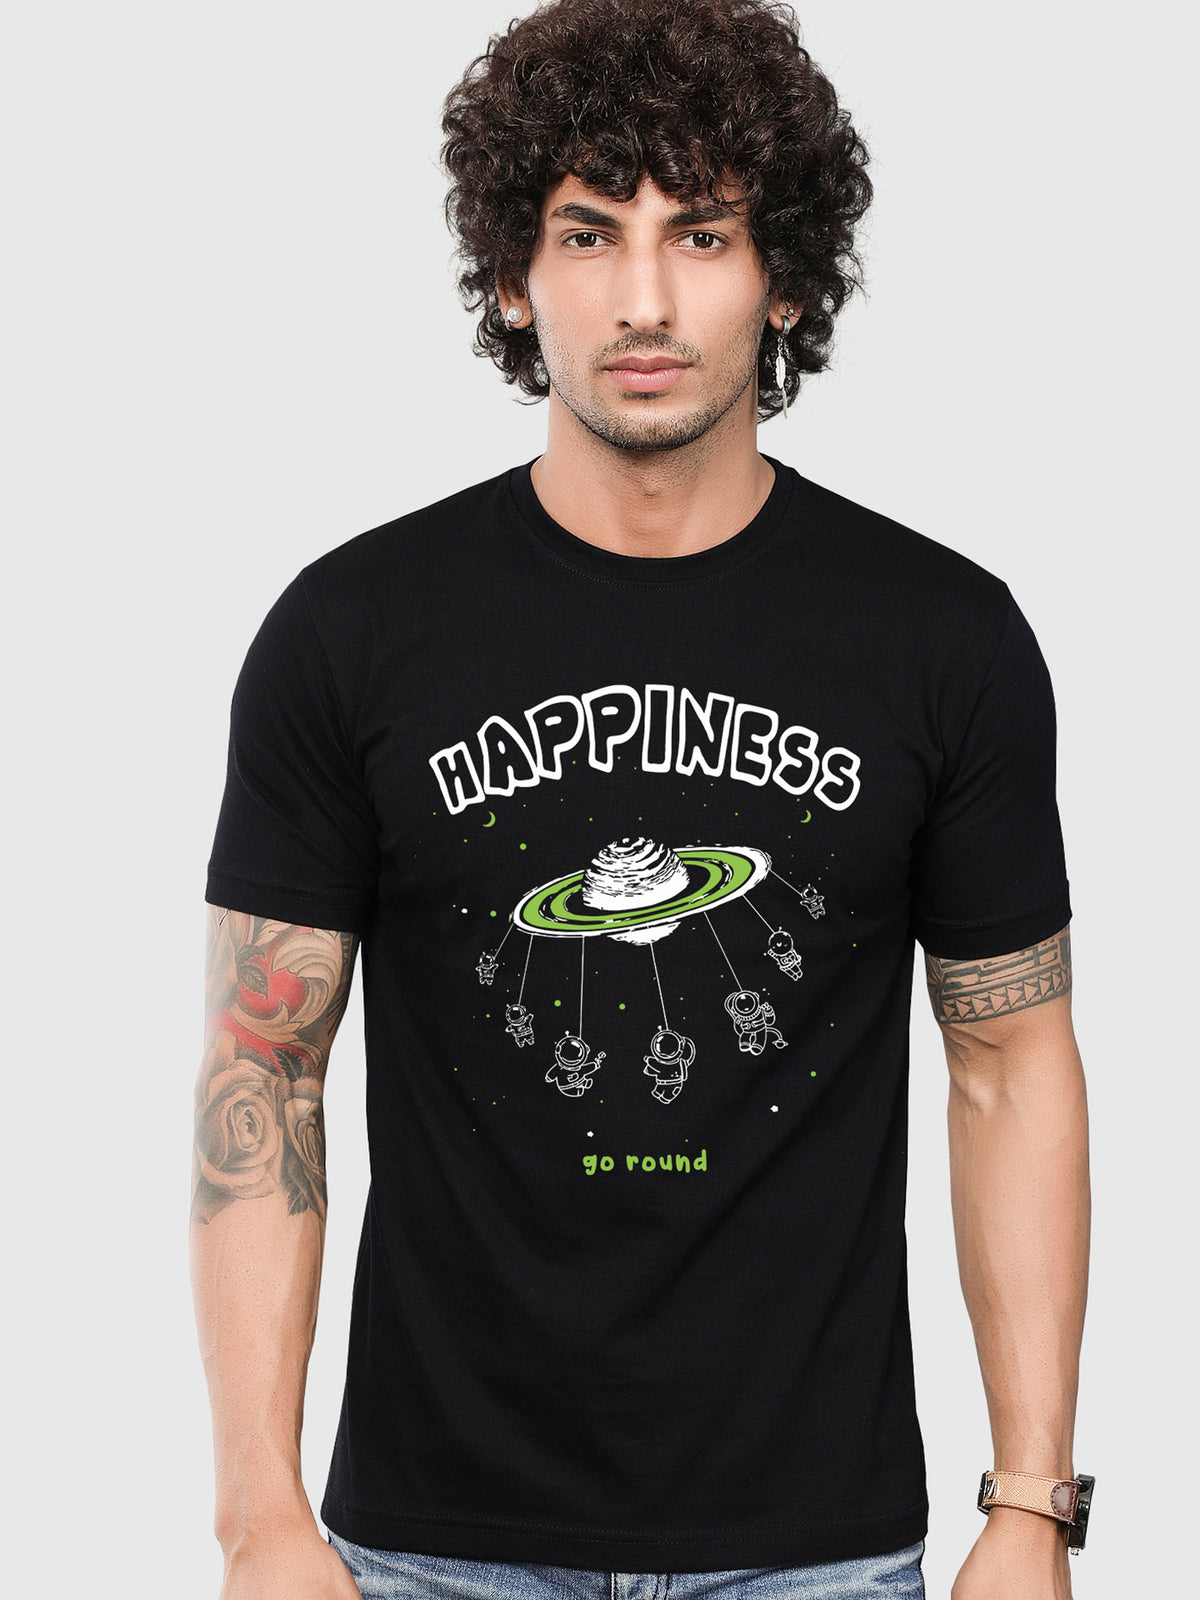 Men's Black Happiness Printed T-shirt